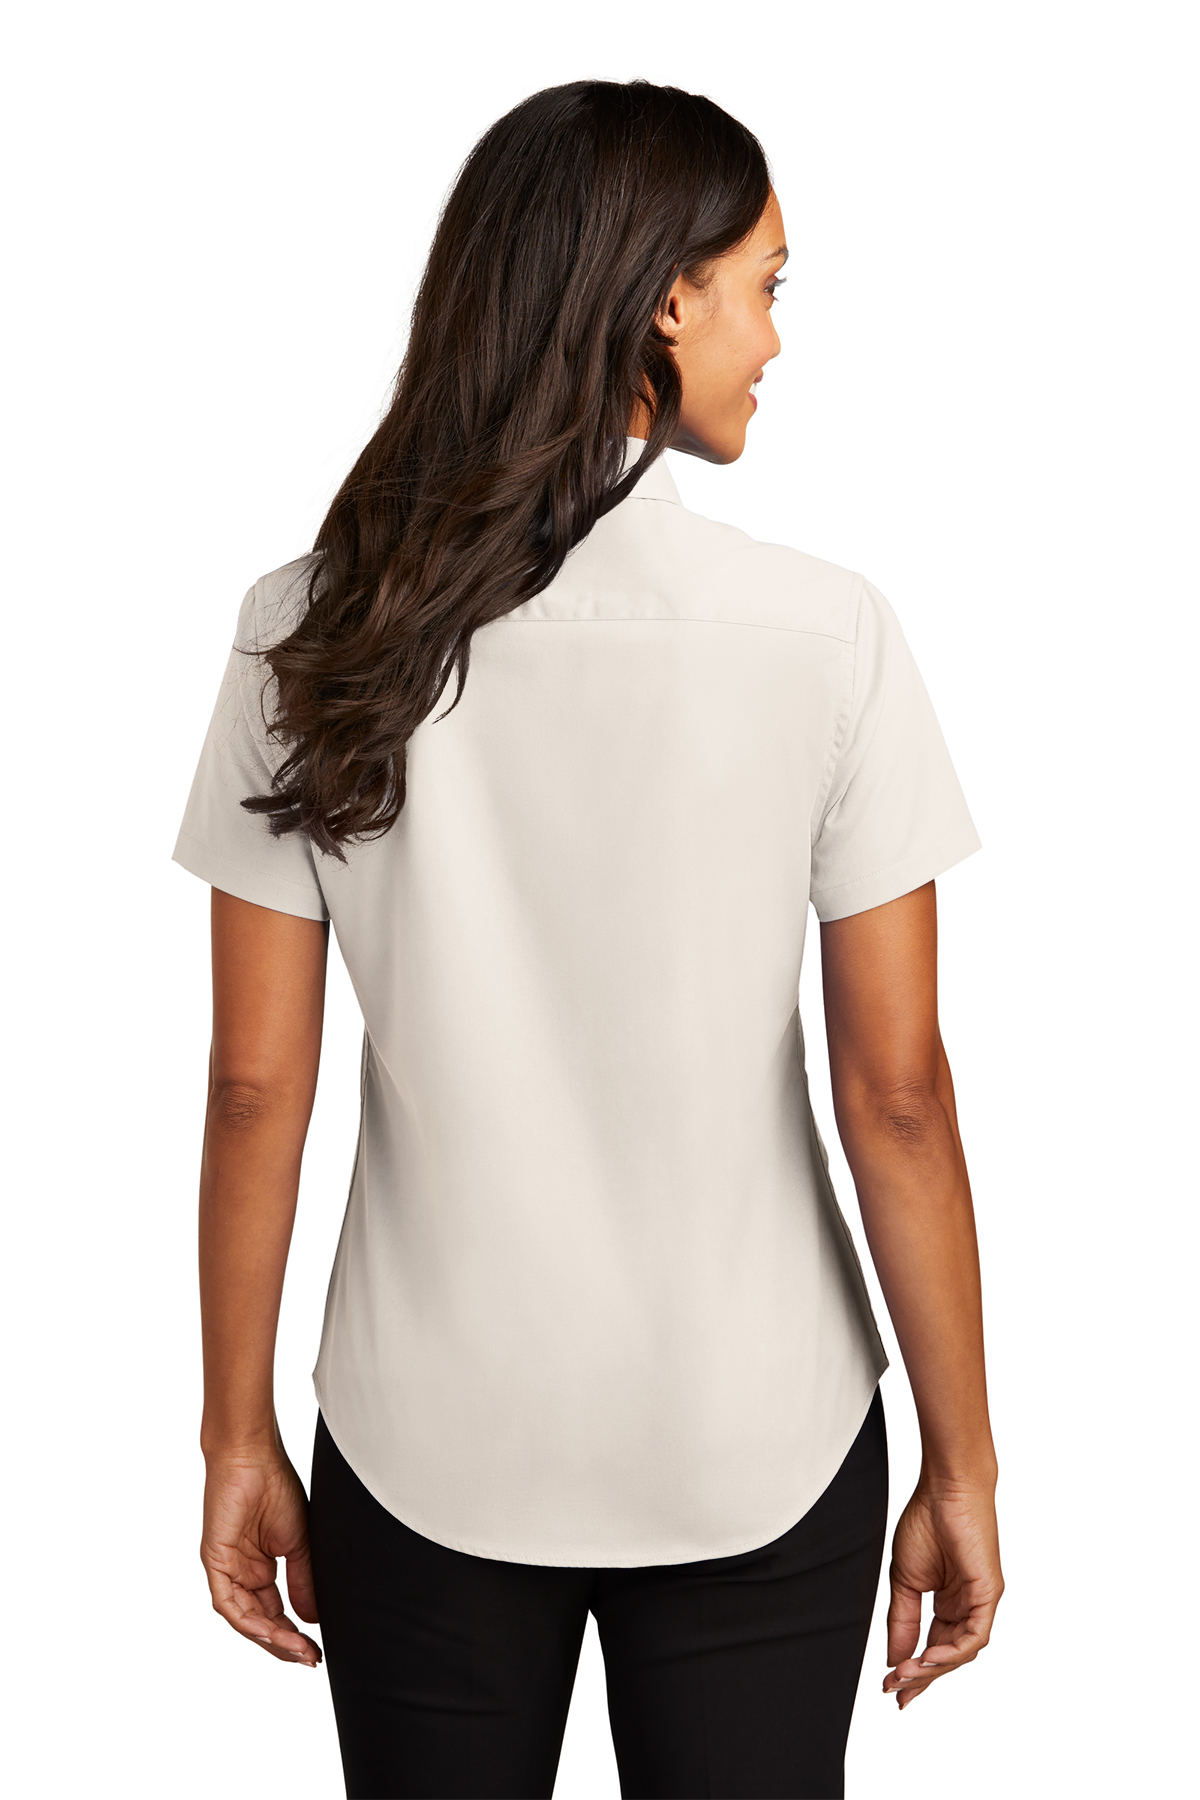 Authority | | Easy Port Shirt Ladies Short Port Sleeve Product Authority Care